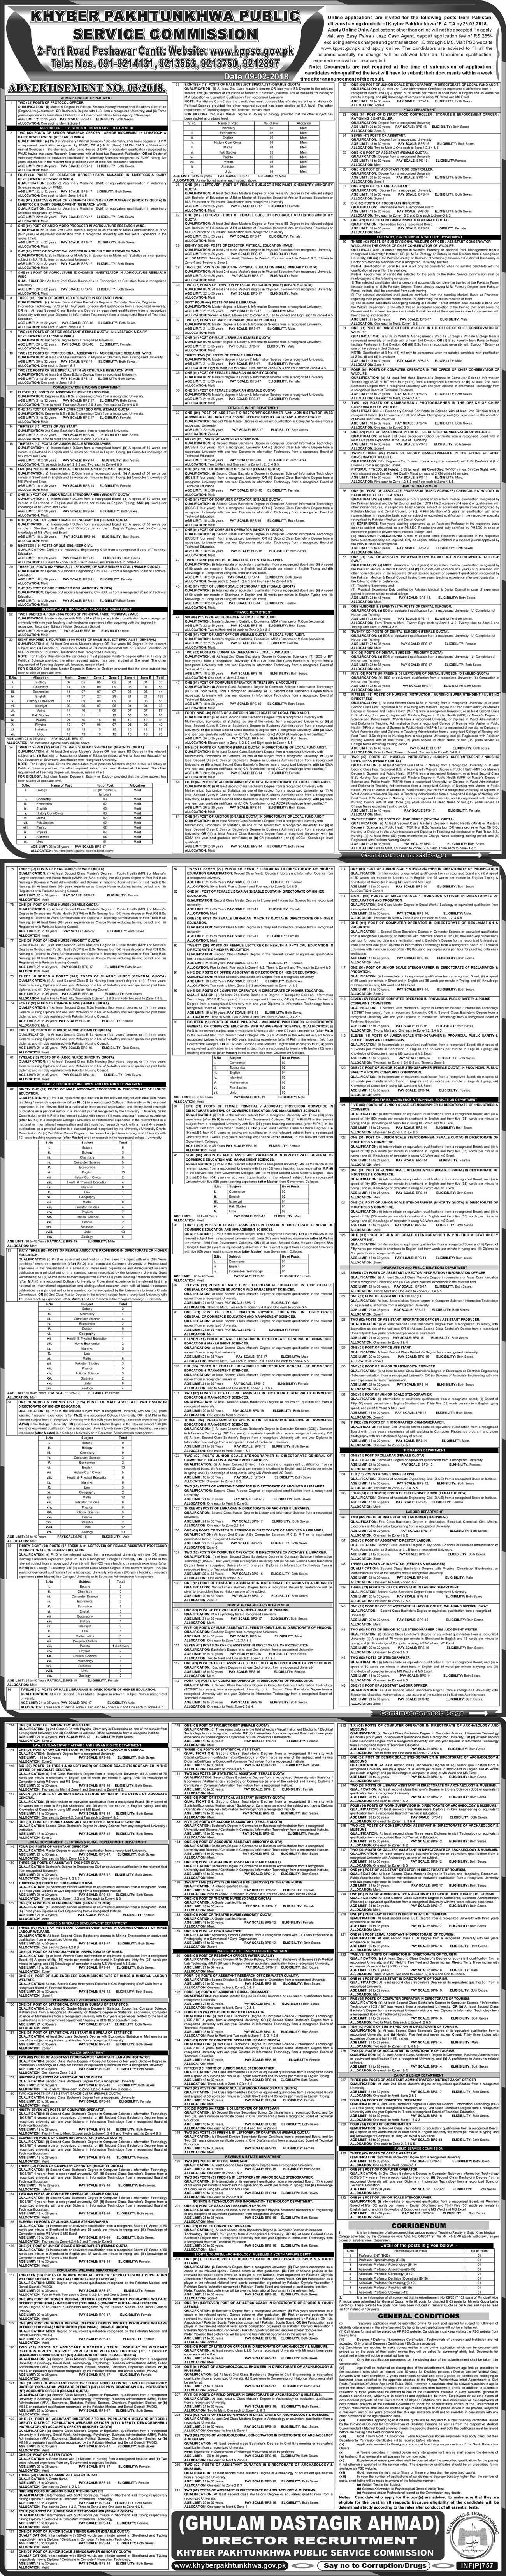 Jobs In Khyber Pakhtunkhawa Public Service Commission 12 Feb 2018